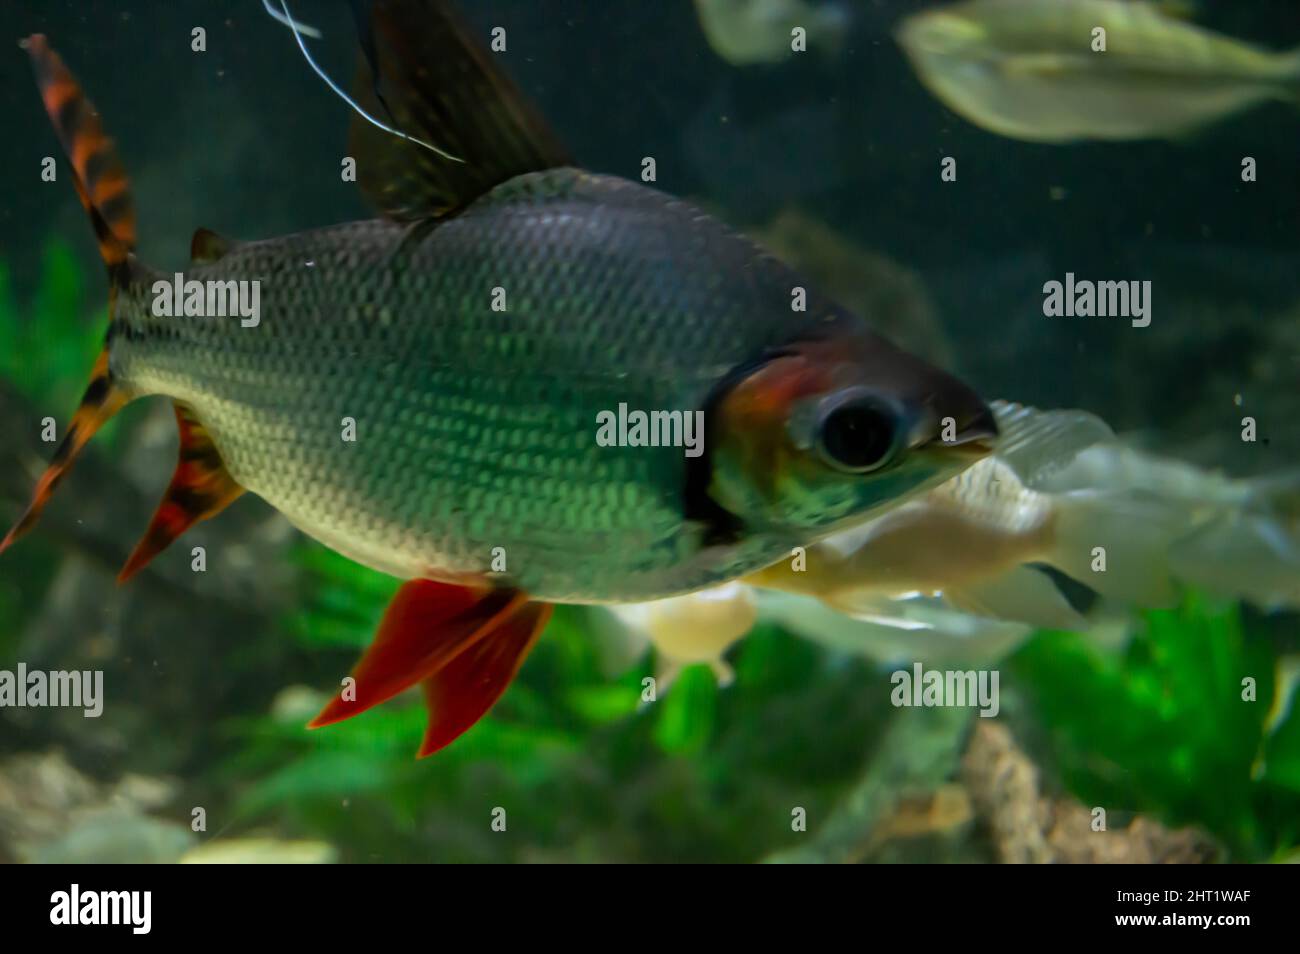 Closeup shot of a Semaprochilodus fish on an aquarium Stock Photo